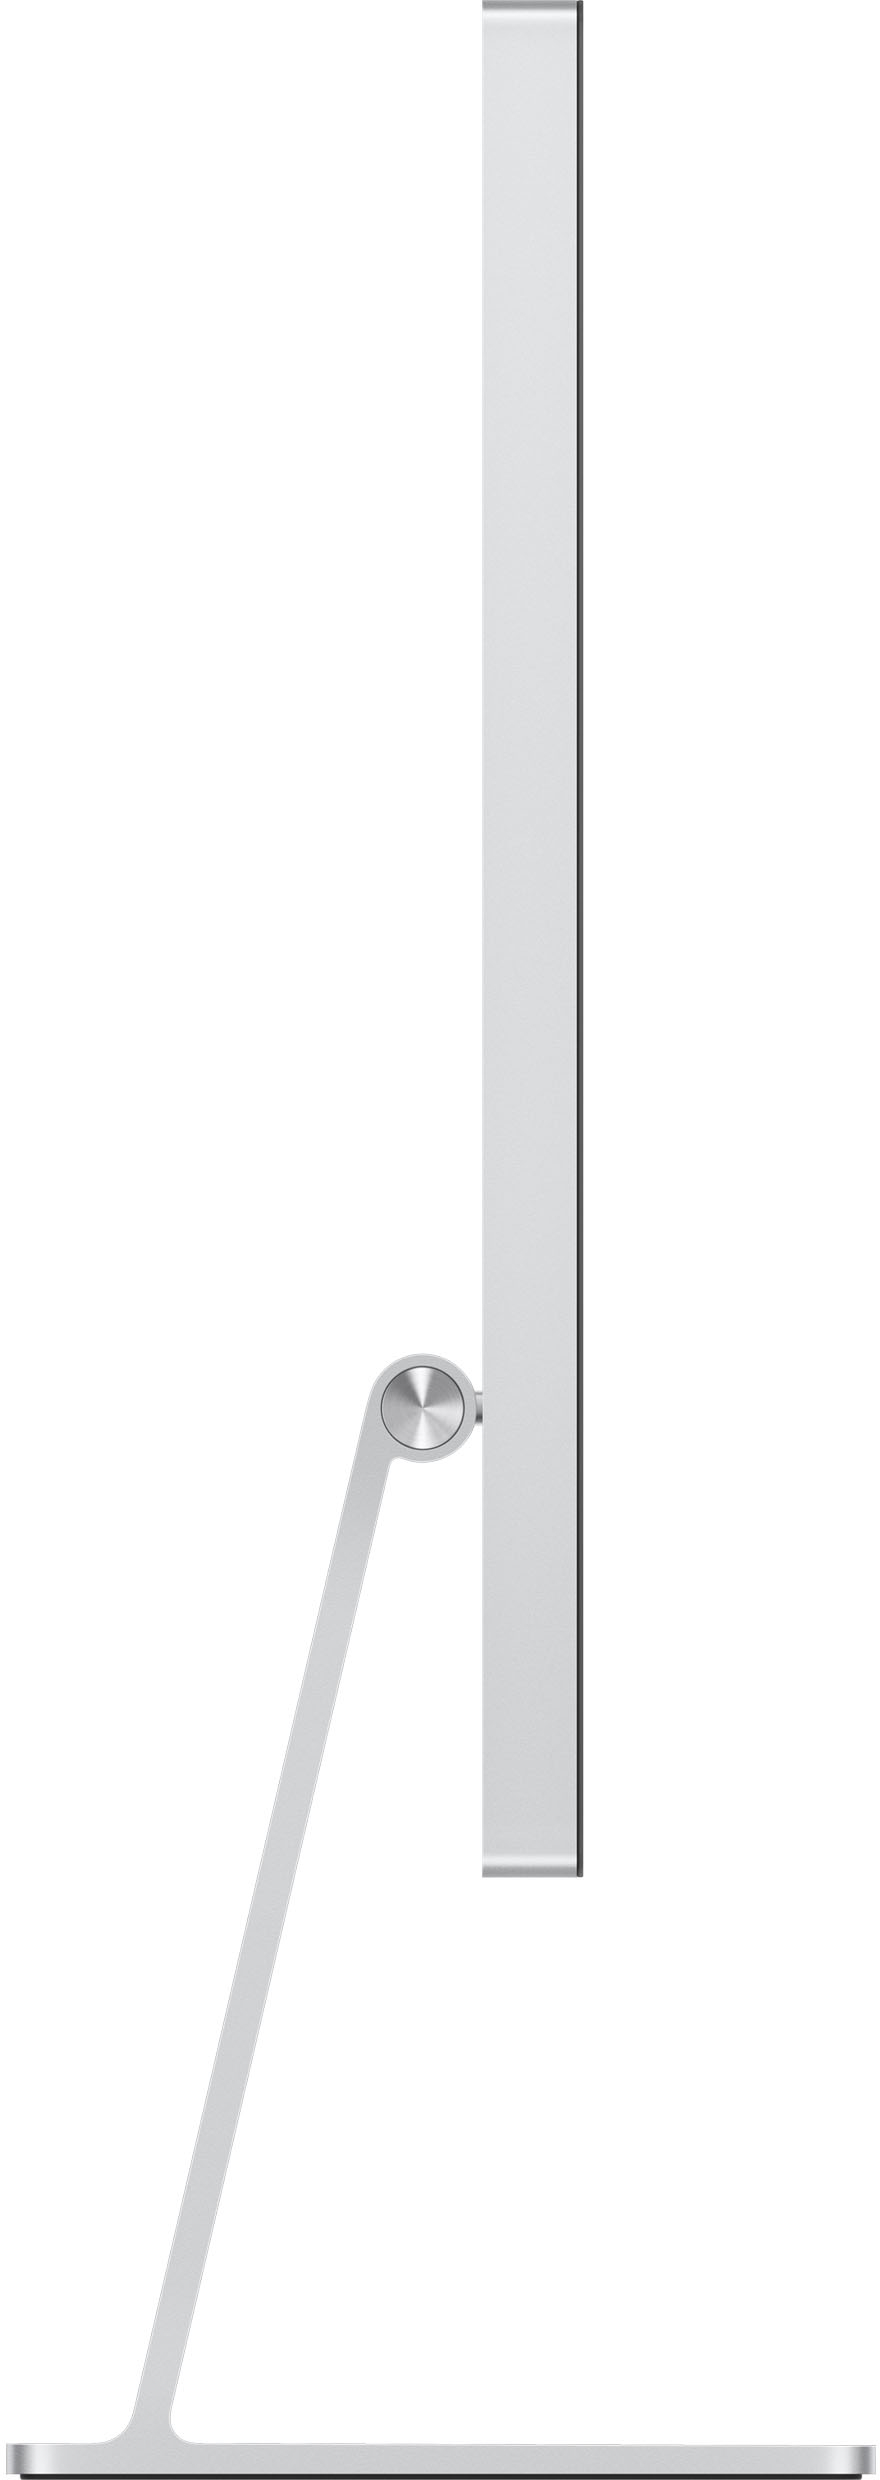 Left View: Apple - Studio Display - Standard Glass Tilt and Height-Adjustable